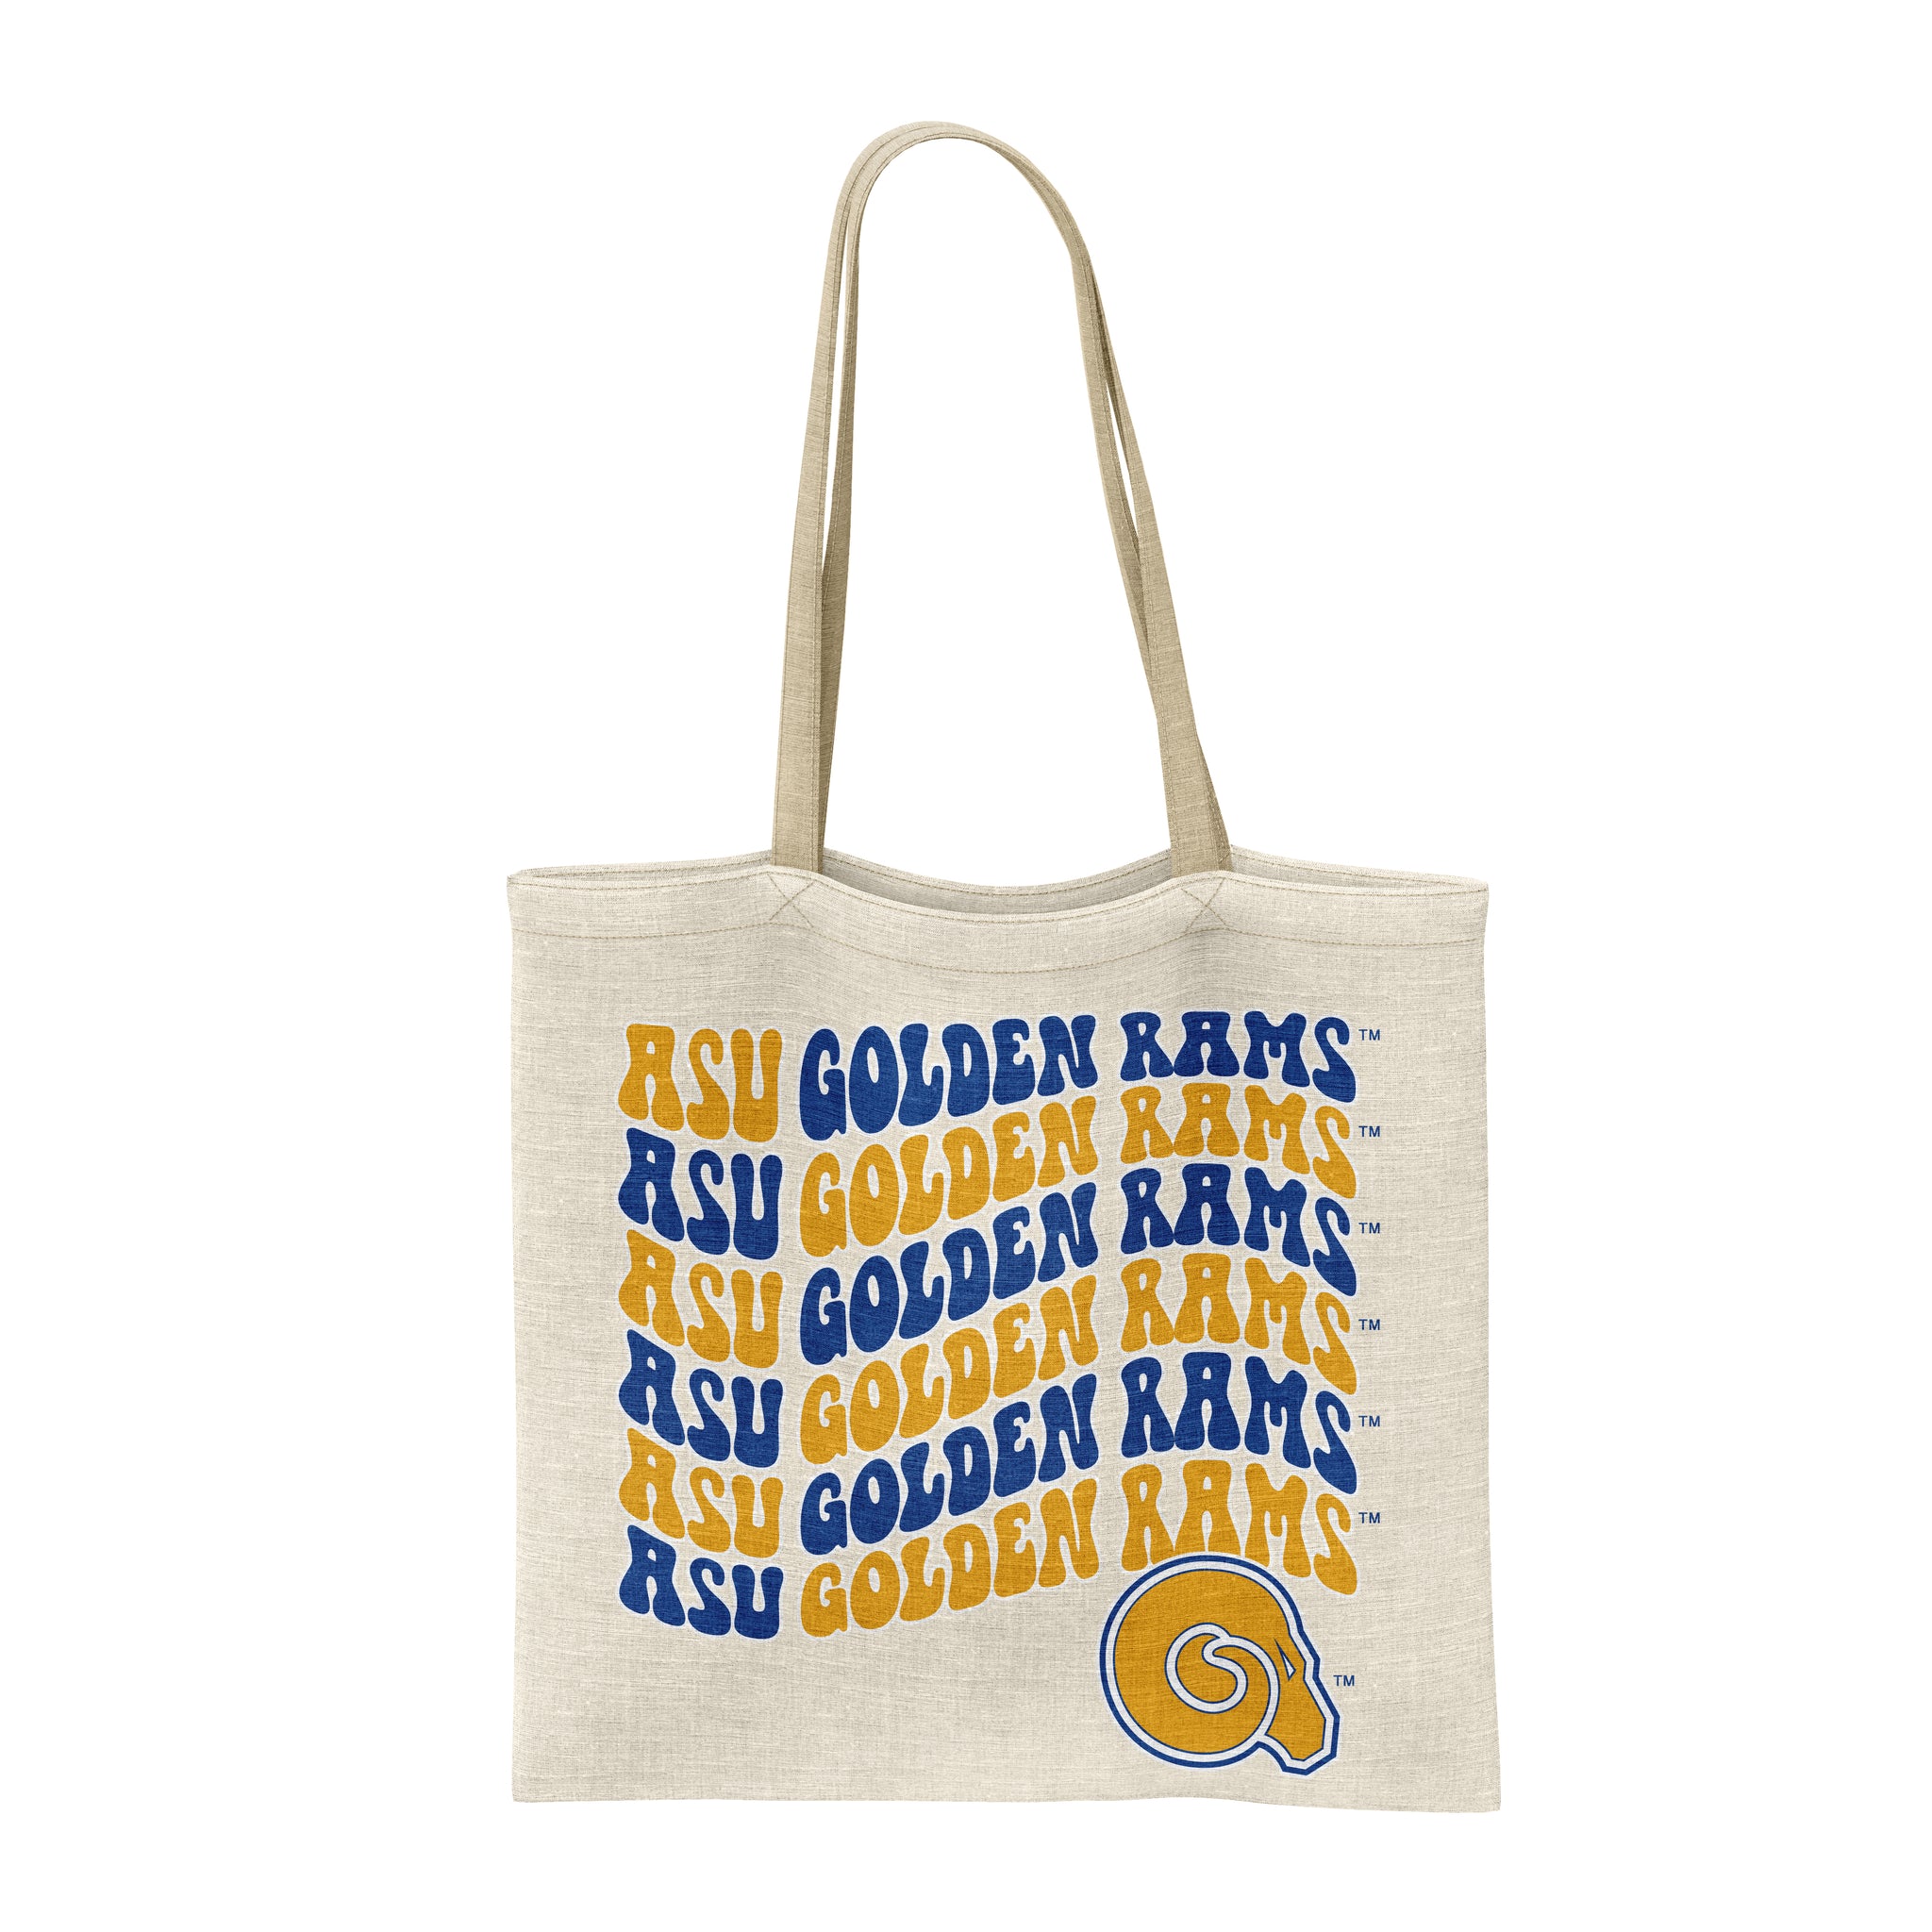 ASU Golden Rams Tote groovy bag